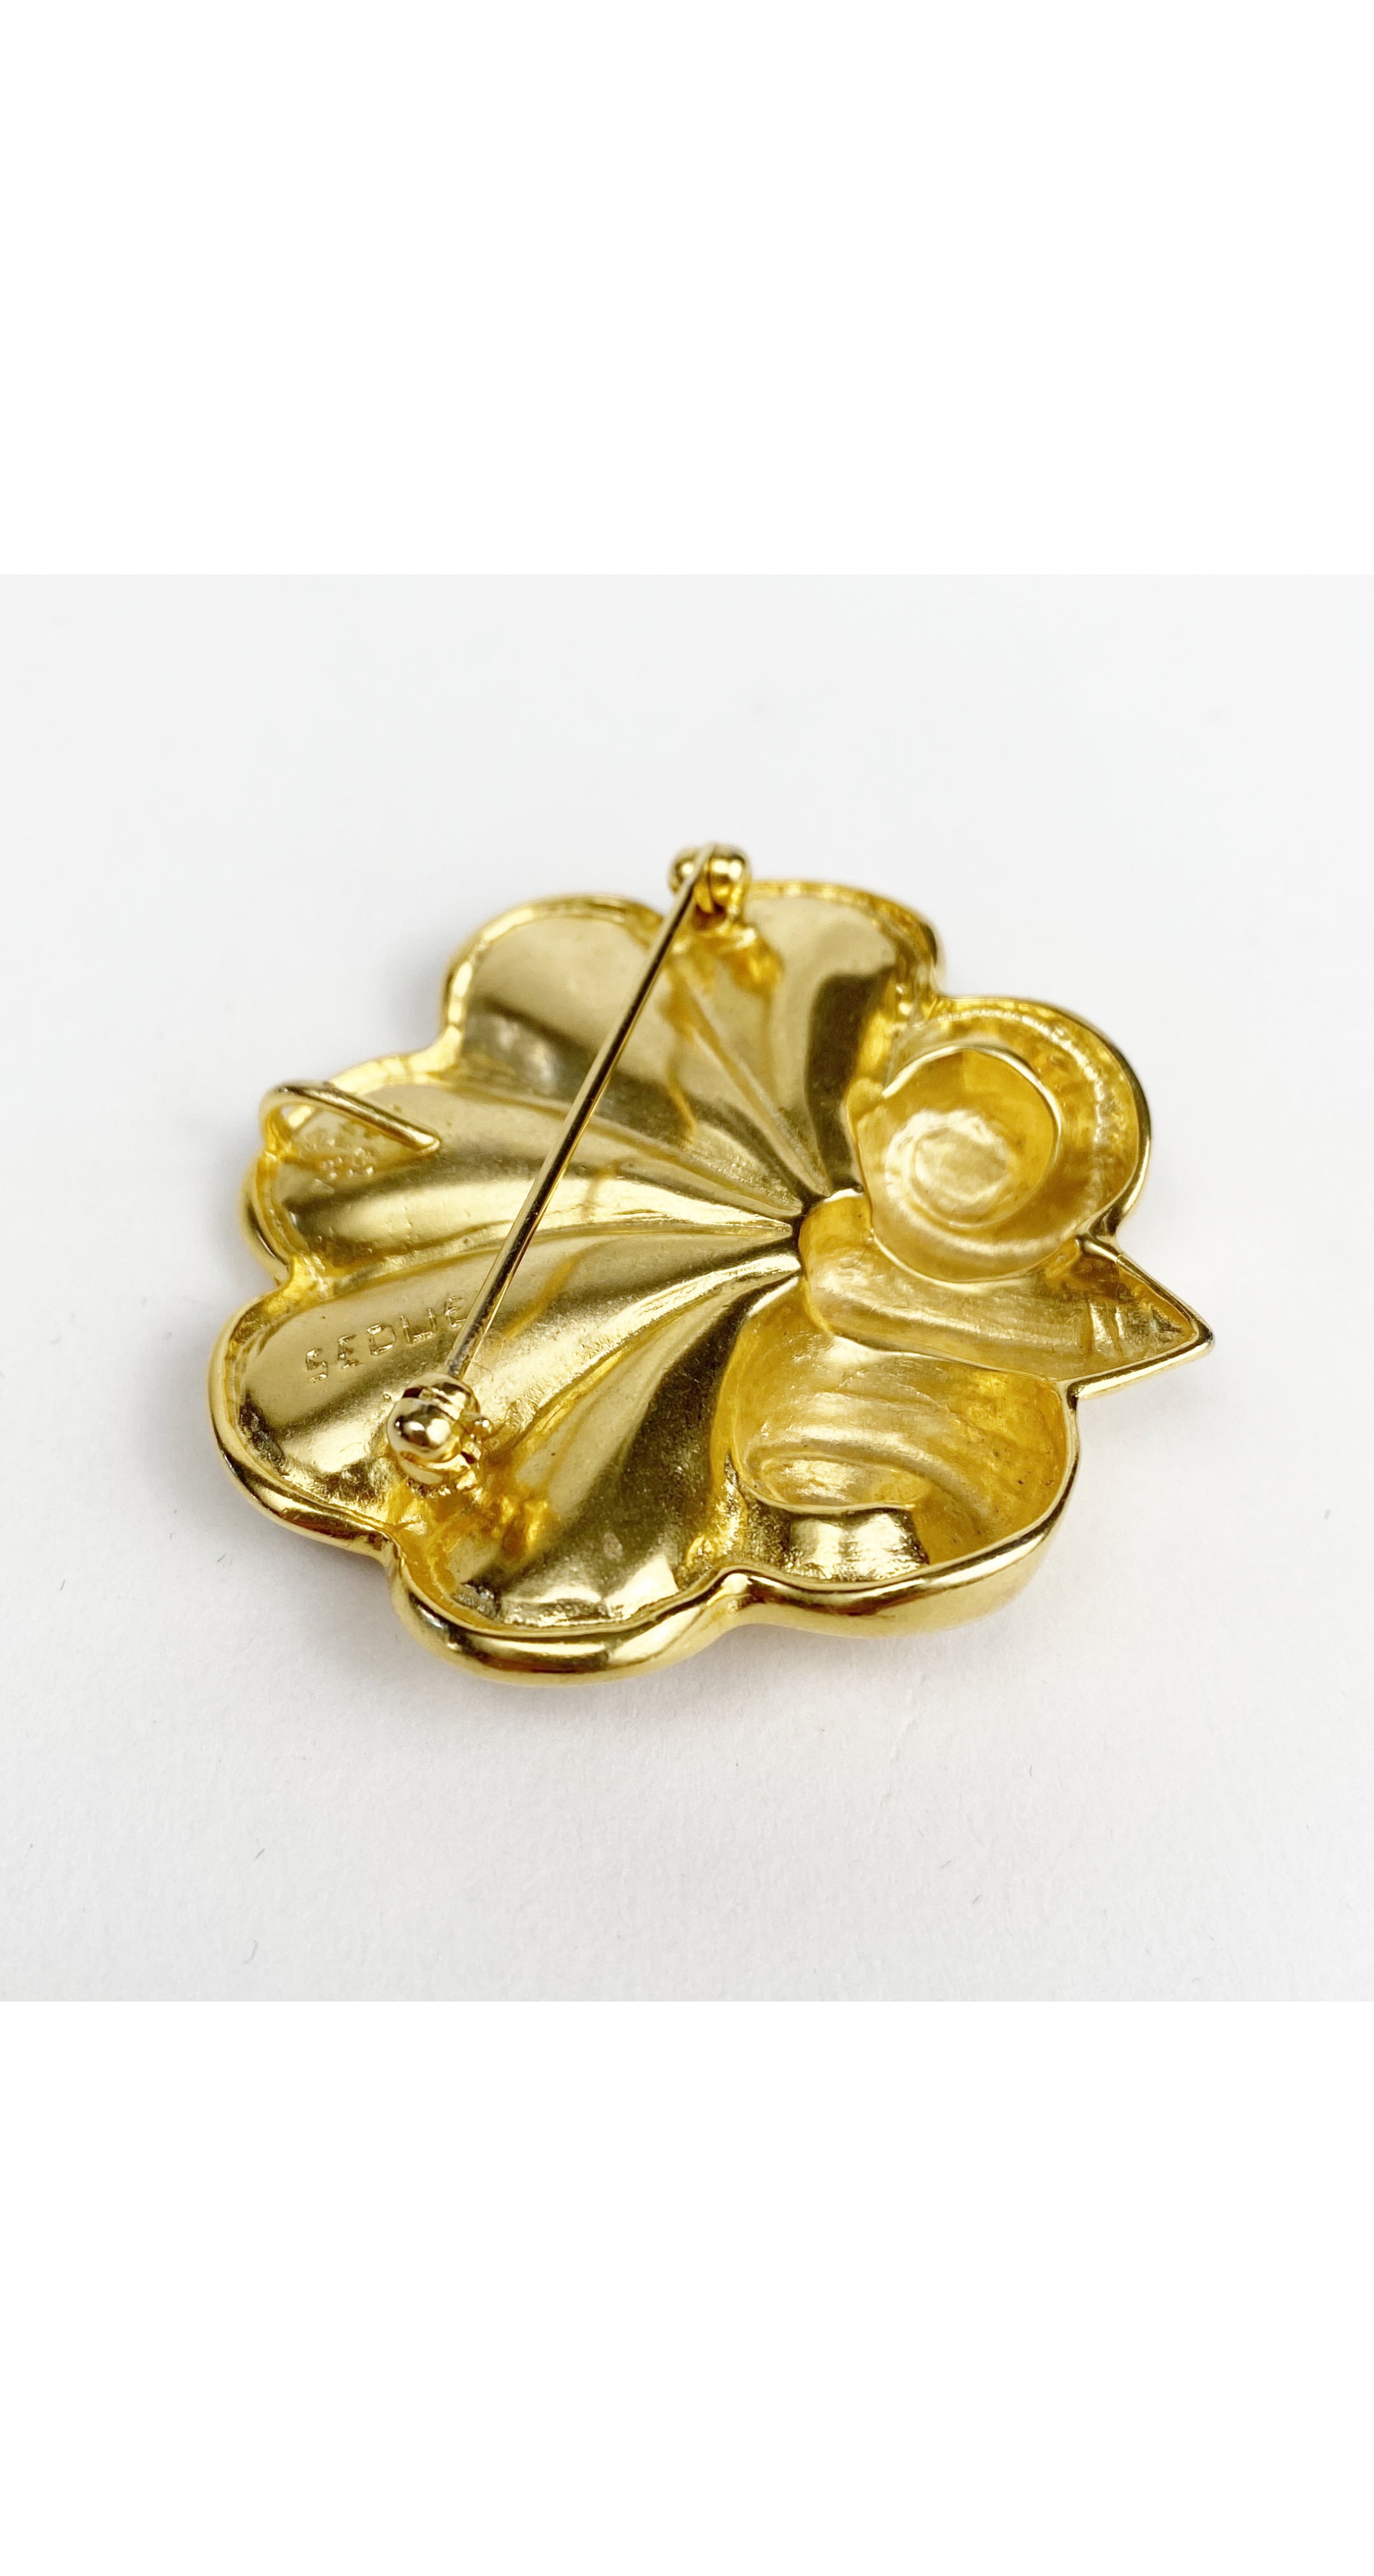 1990 Sedue Gold-Tone Scalloped Pendant Brooch